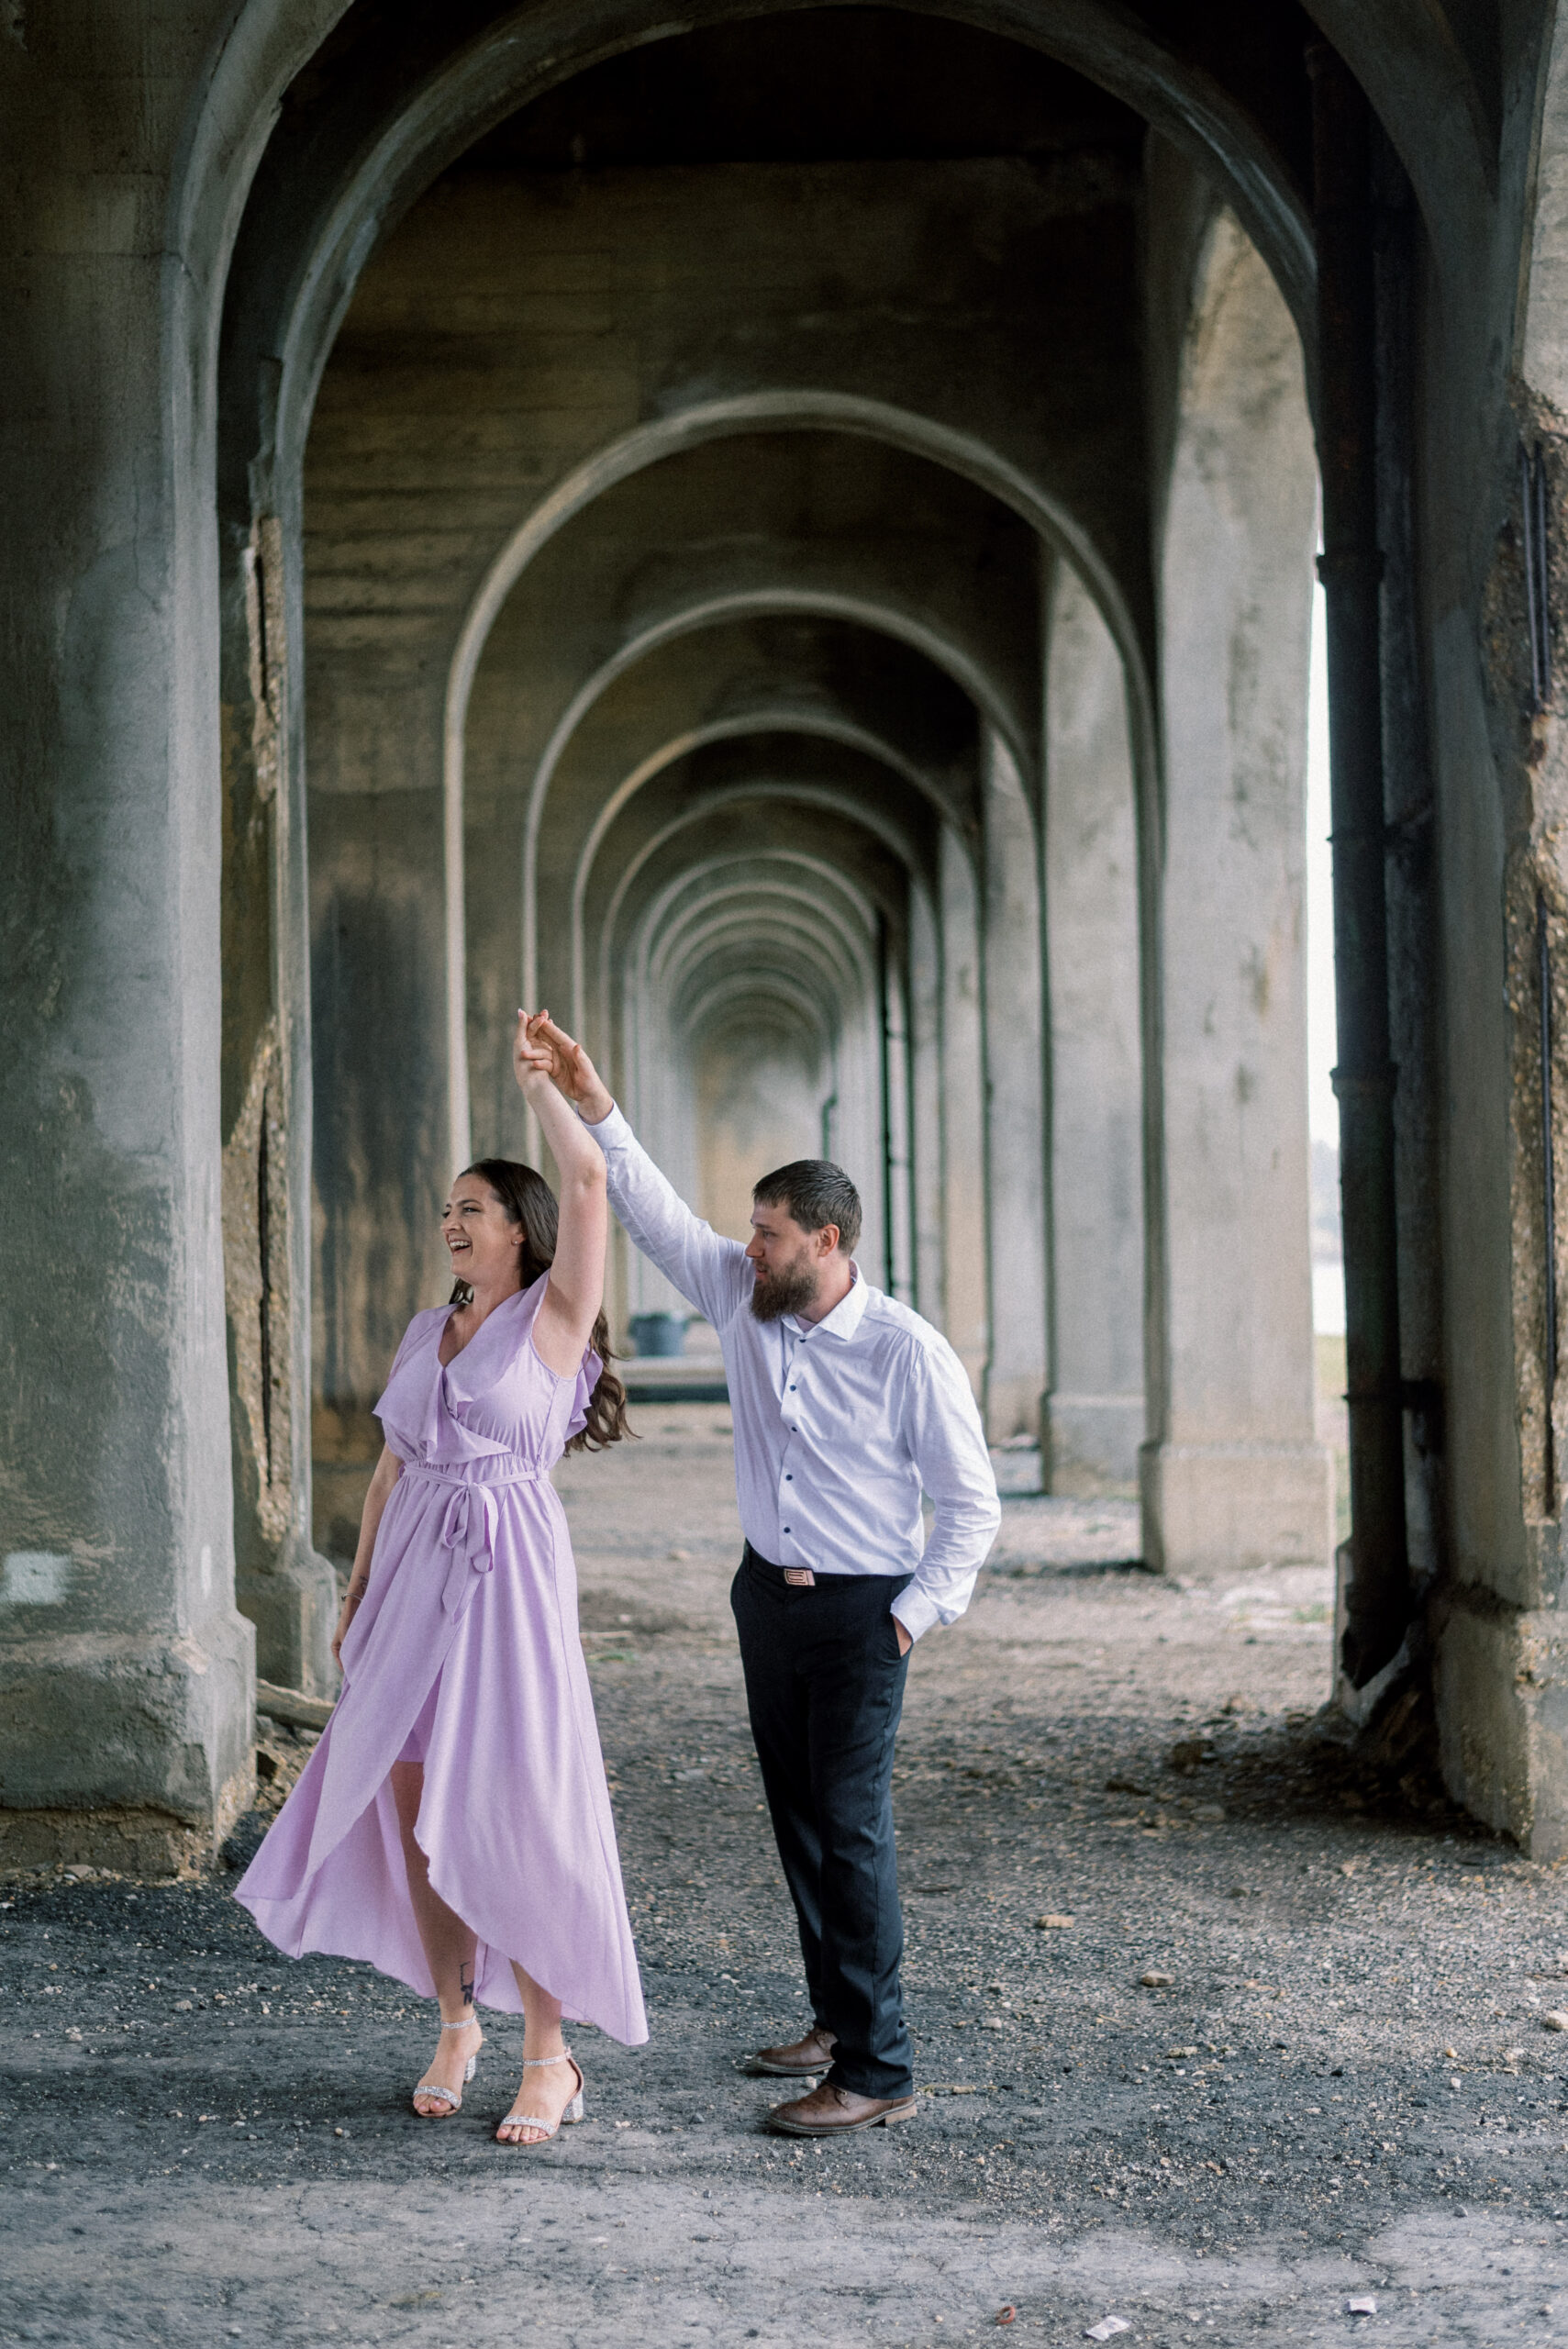 Pennsylvania wedding photographer captures man spinning woman while dancing